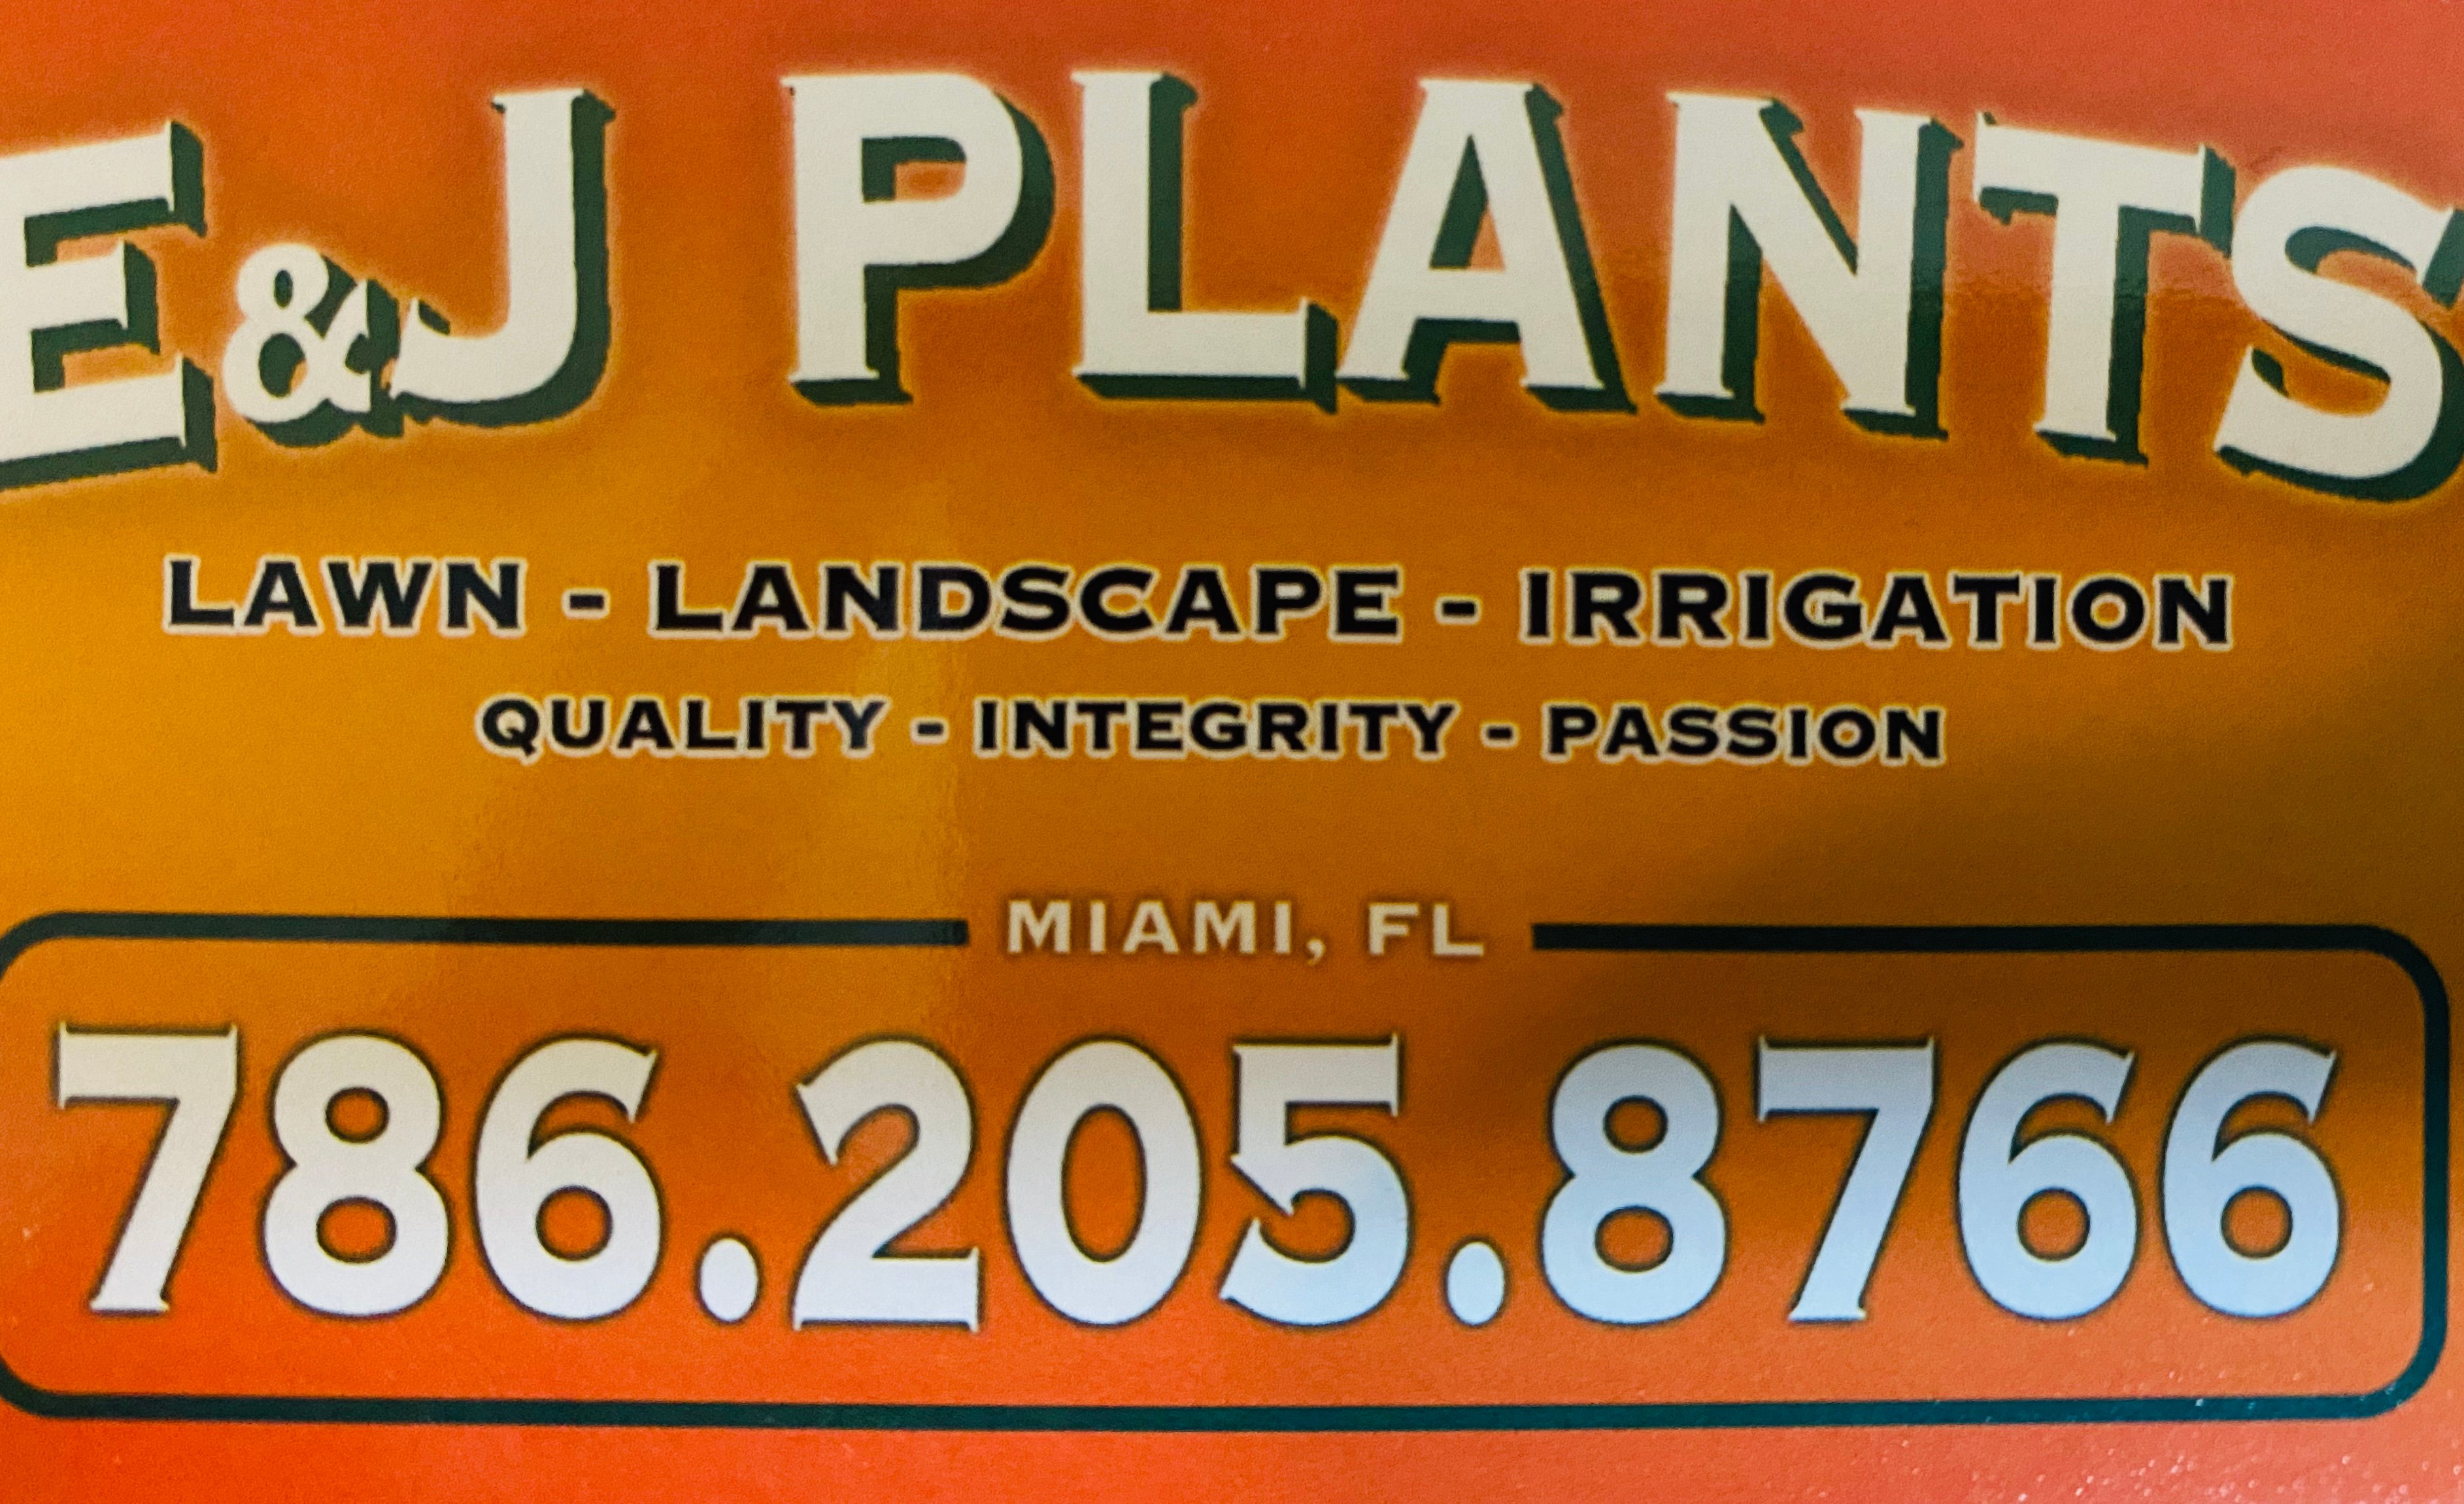 E&J Plants Logo